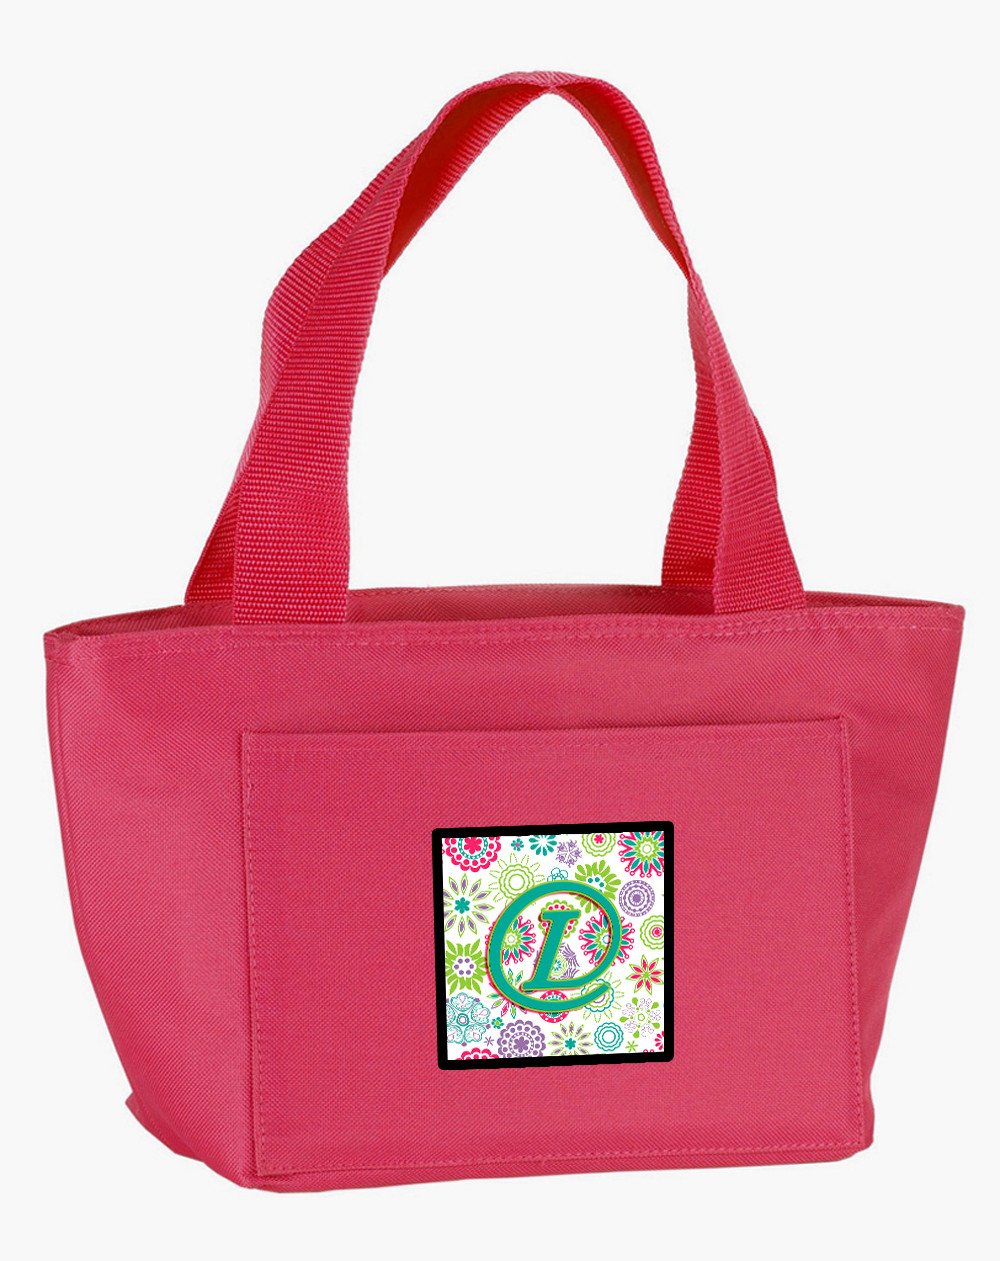 Letter L Flowers Pink Teal Green Initial Lunch Bag CJ2011-LPK-8808 by Caroline's Treasures